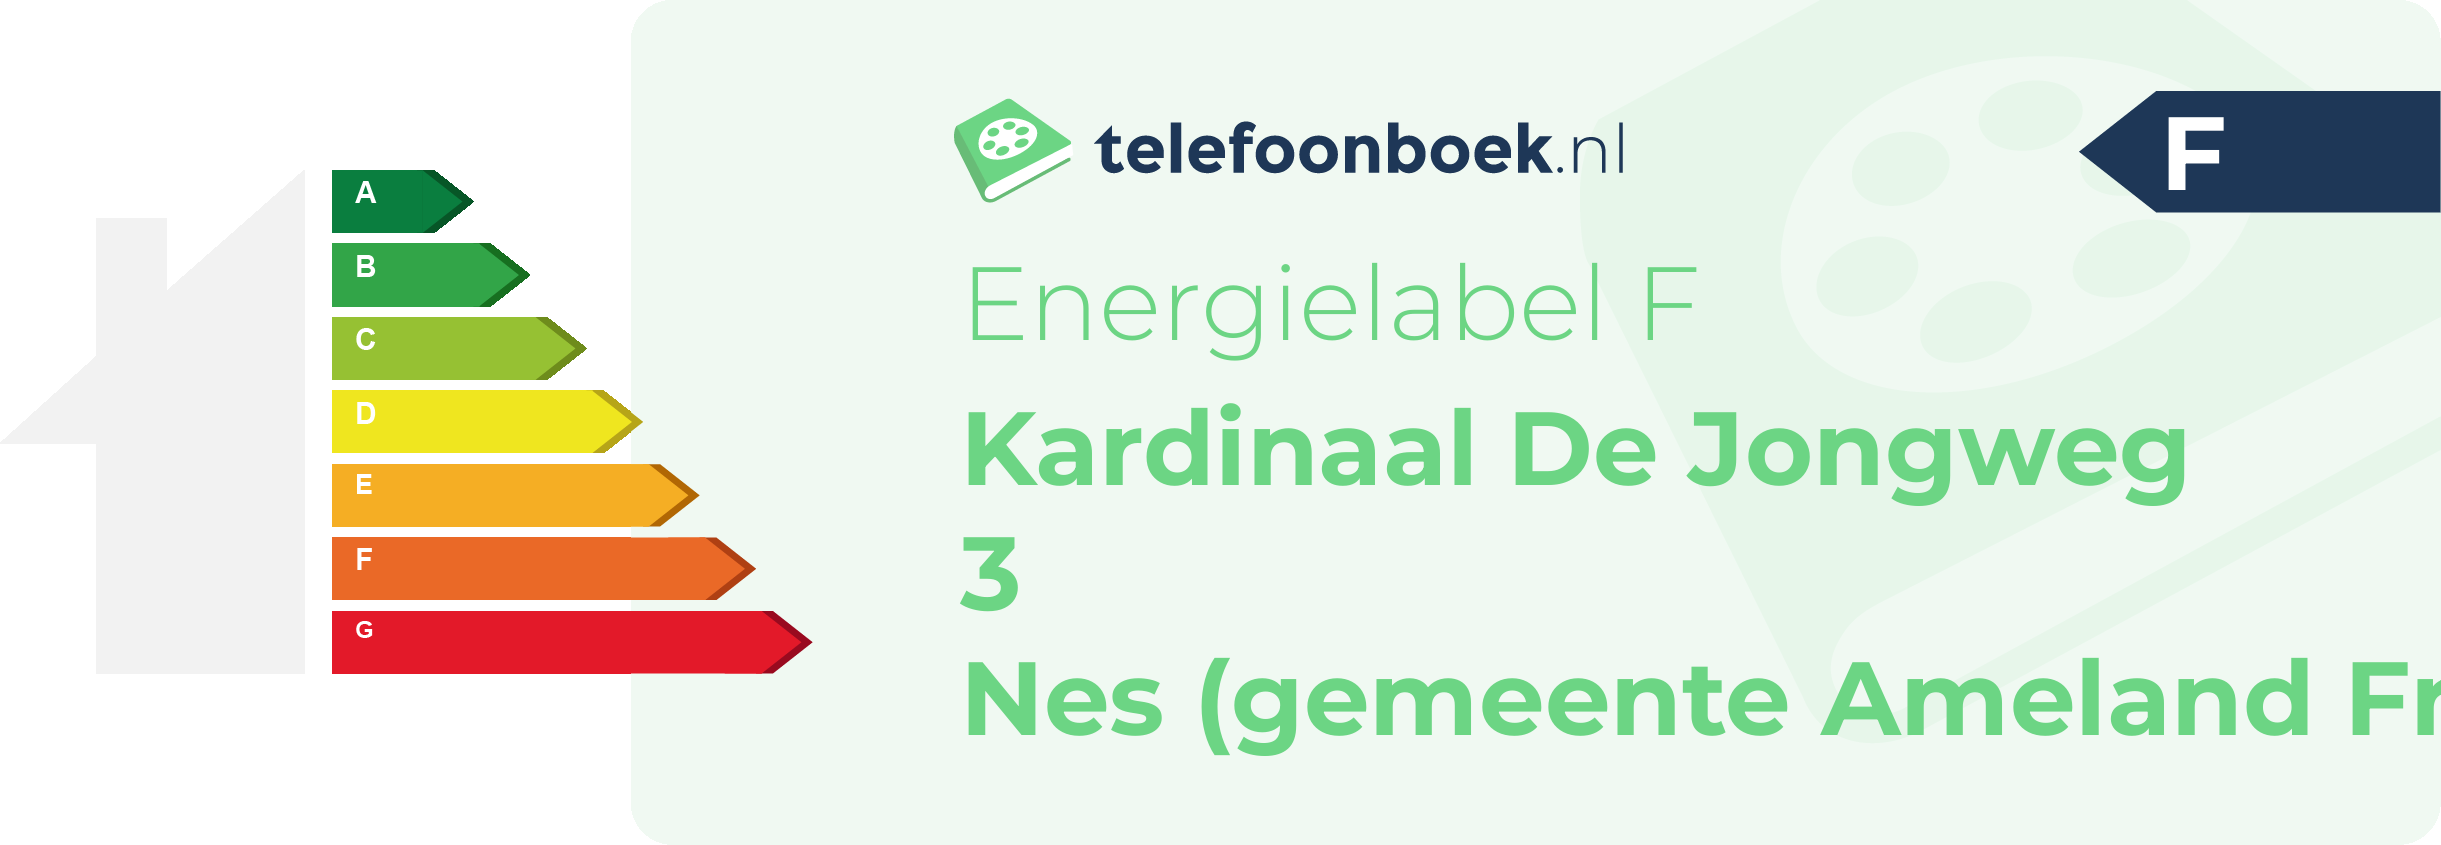 Energielabel Kardinaal De Jongweg 3 Nes (gemeente Ameland Friesland)